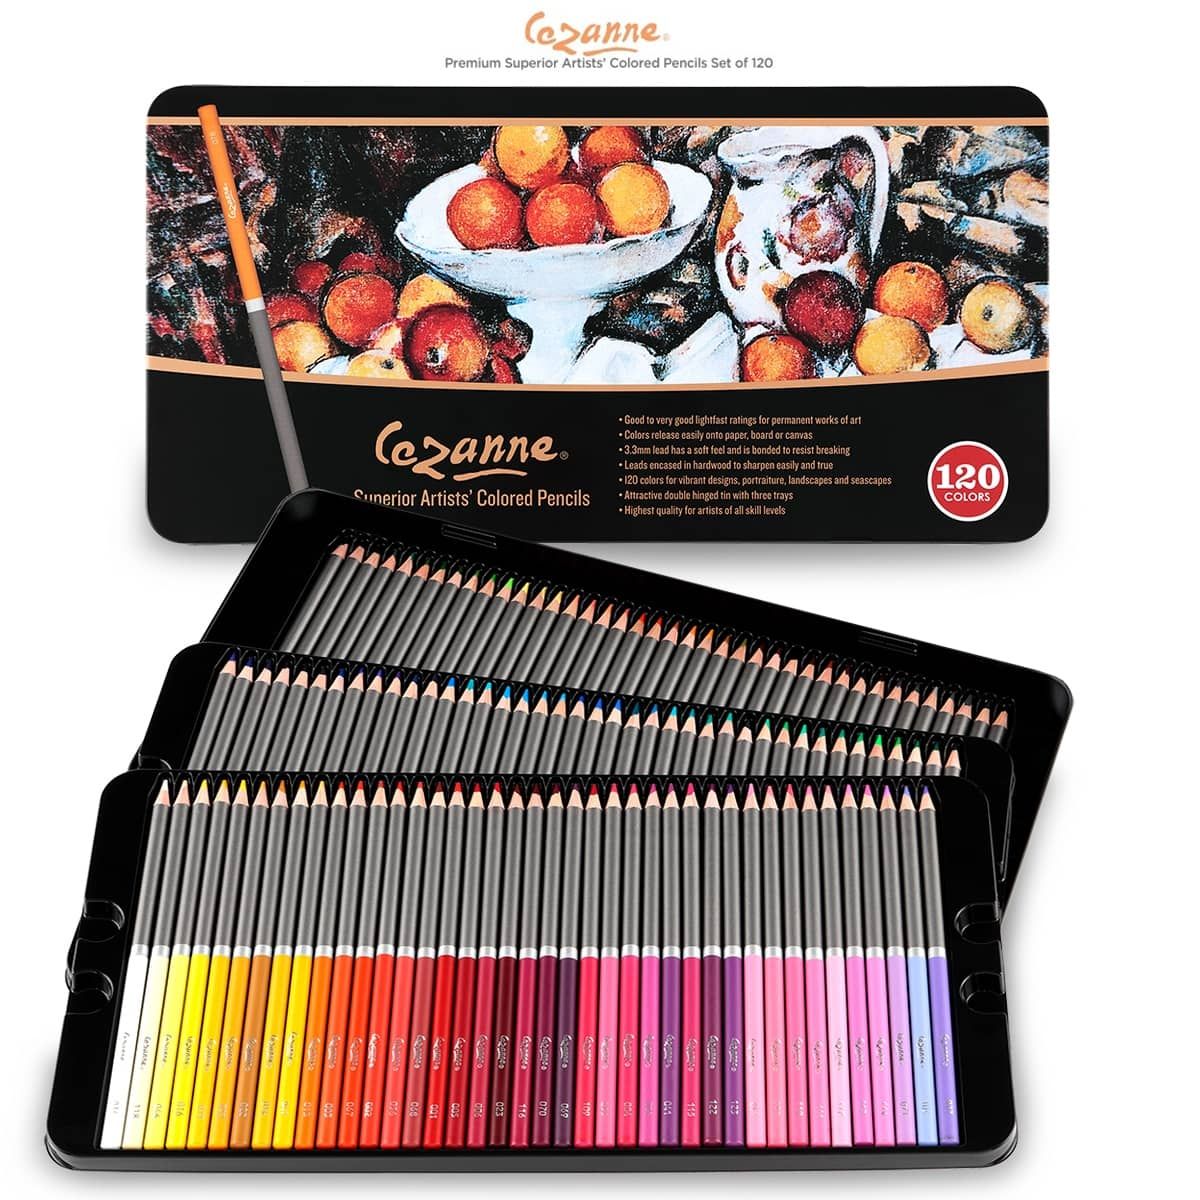 https://www.jerrysartarama.com/media/catalog/product/cache/ecb49a32eeb5603594b082bd5fe65733/c/e/cezanne-artist-colored-pencils-120-set-best-colored-pencils-main_1.jpg